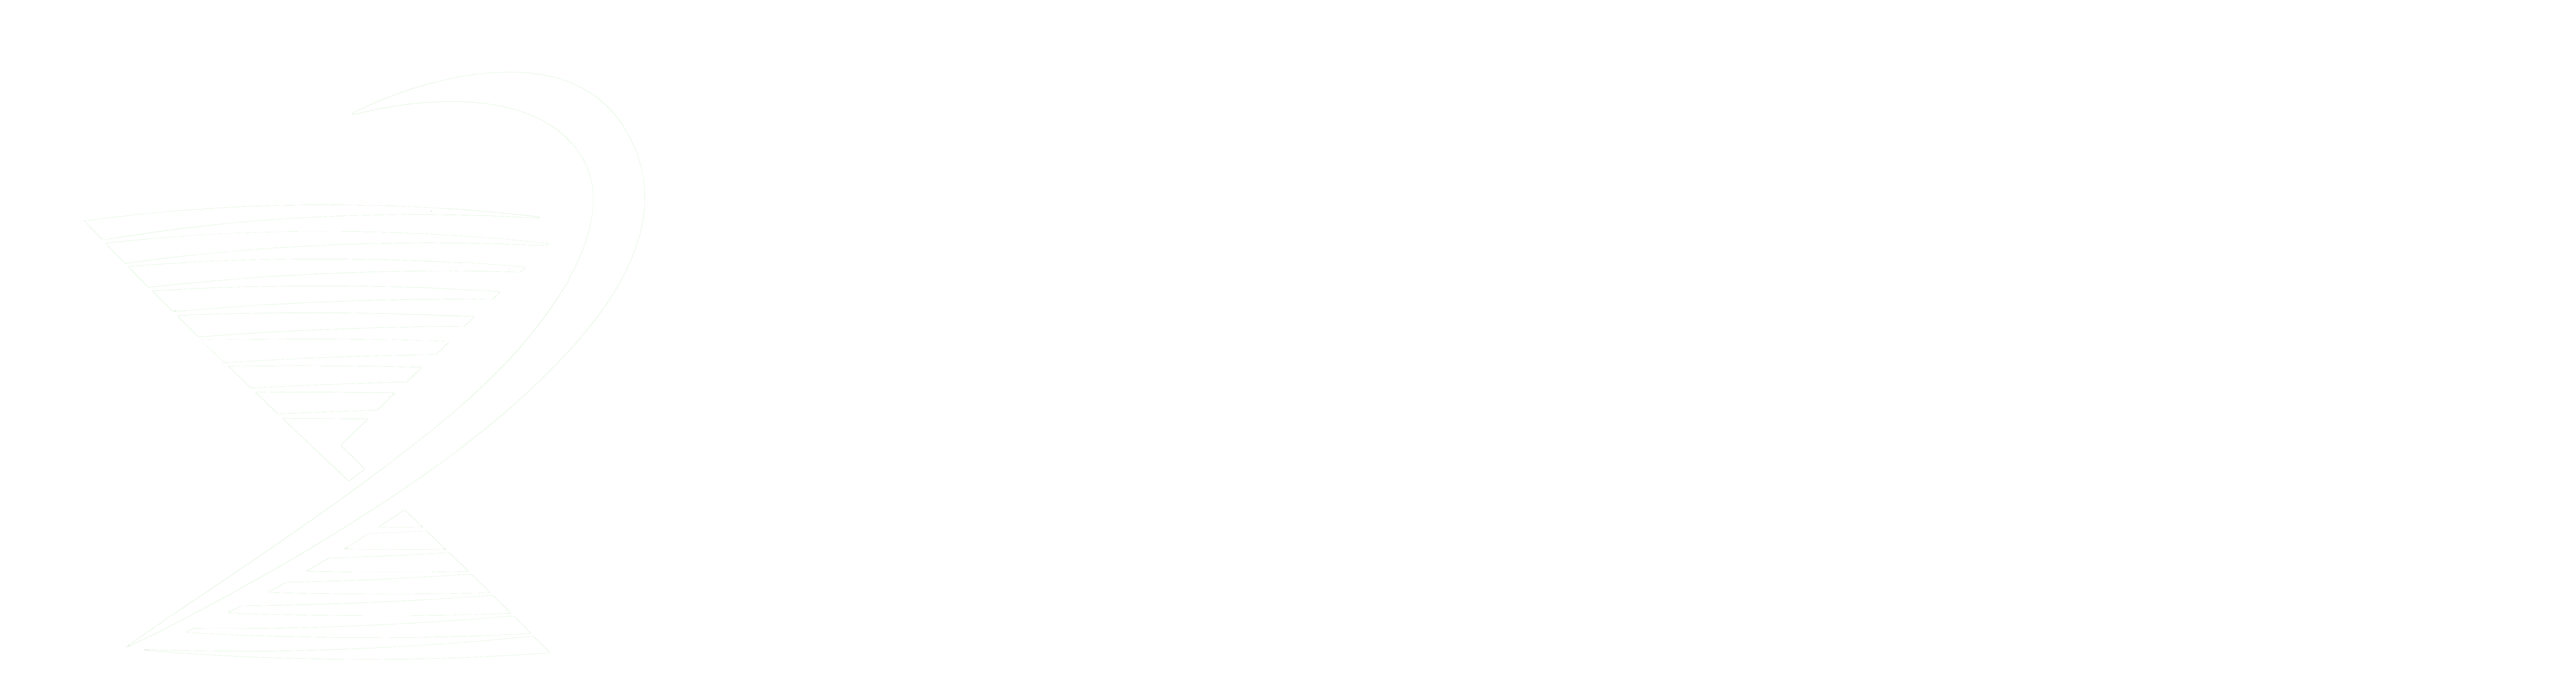 Farmacia Portocarrero